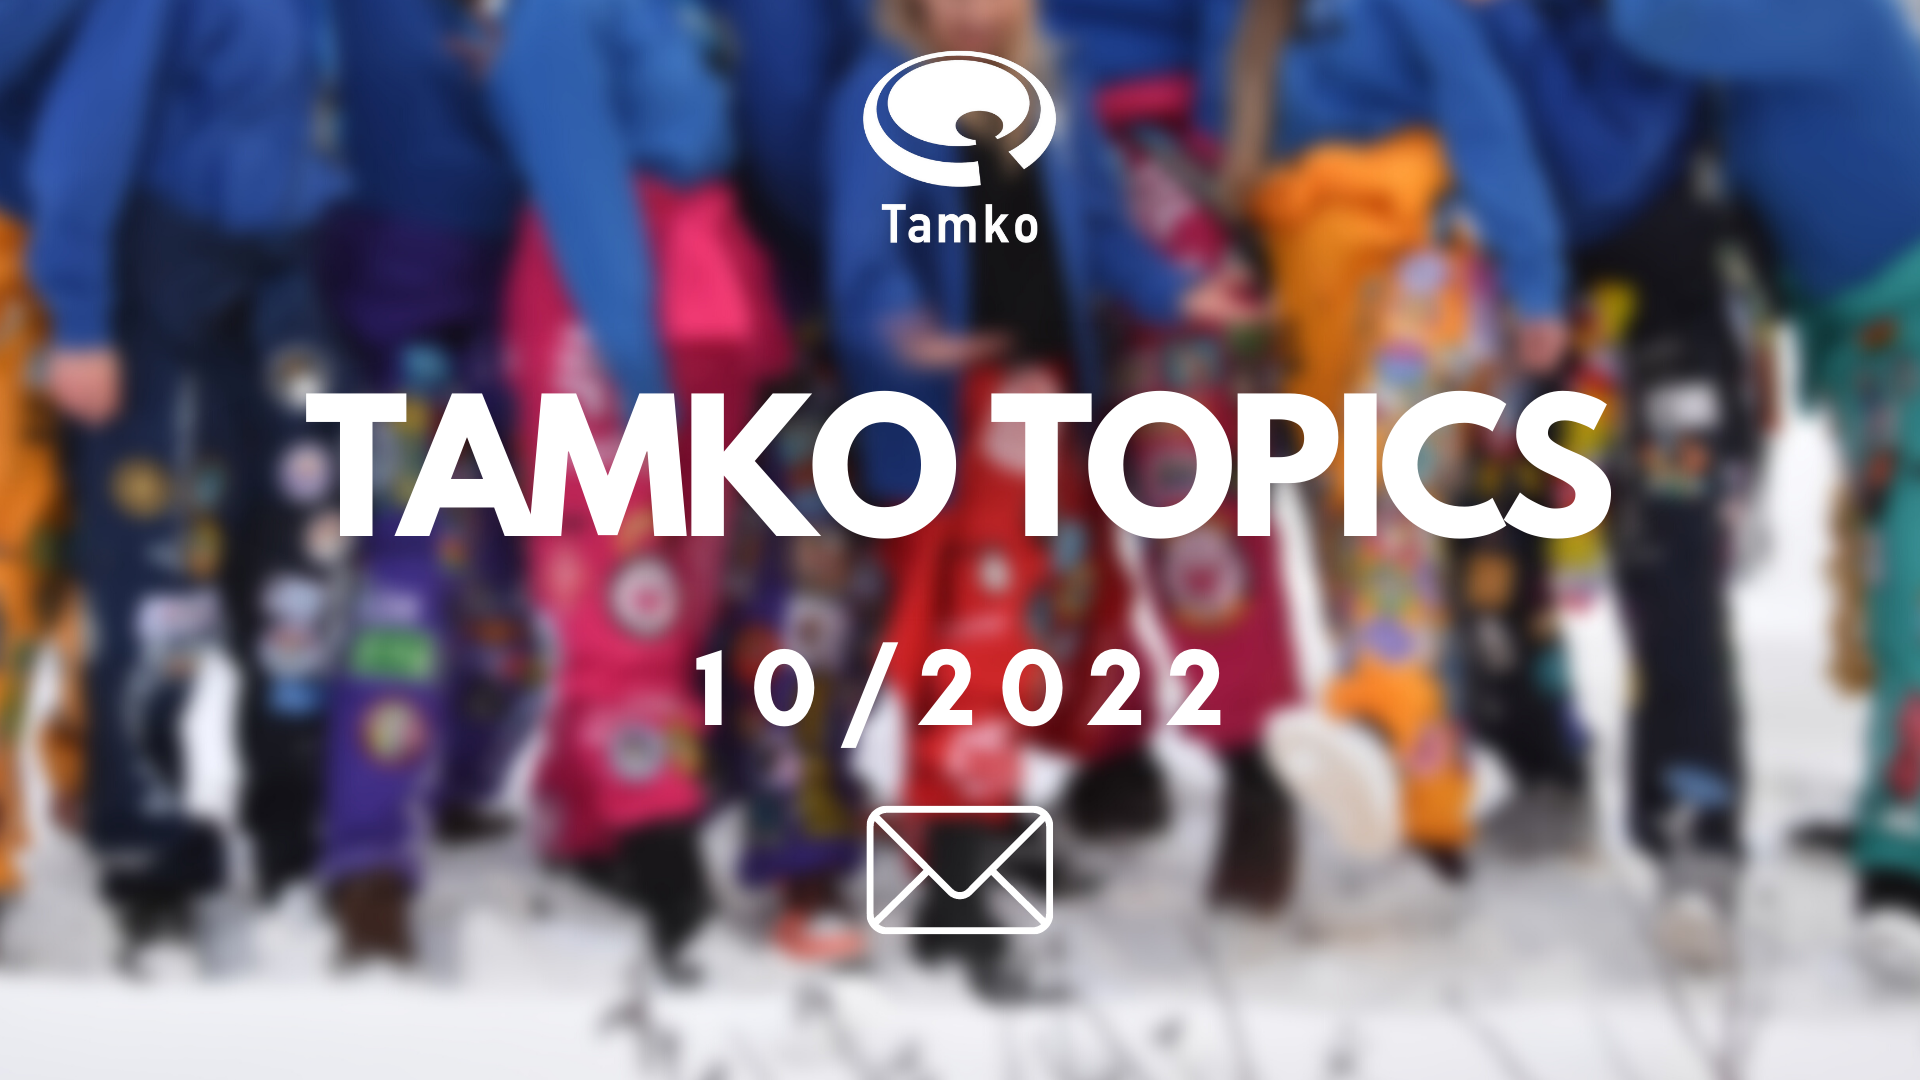 TAMKO TOPICS 10/2022